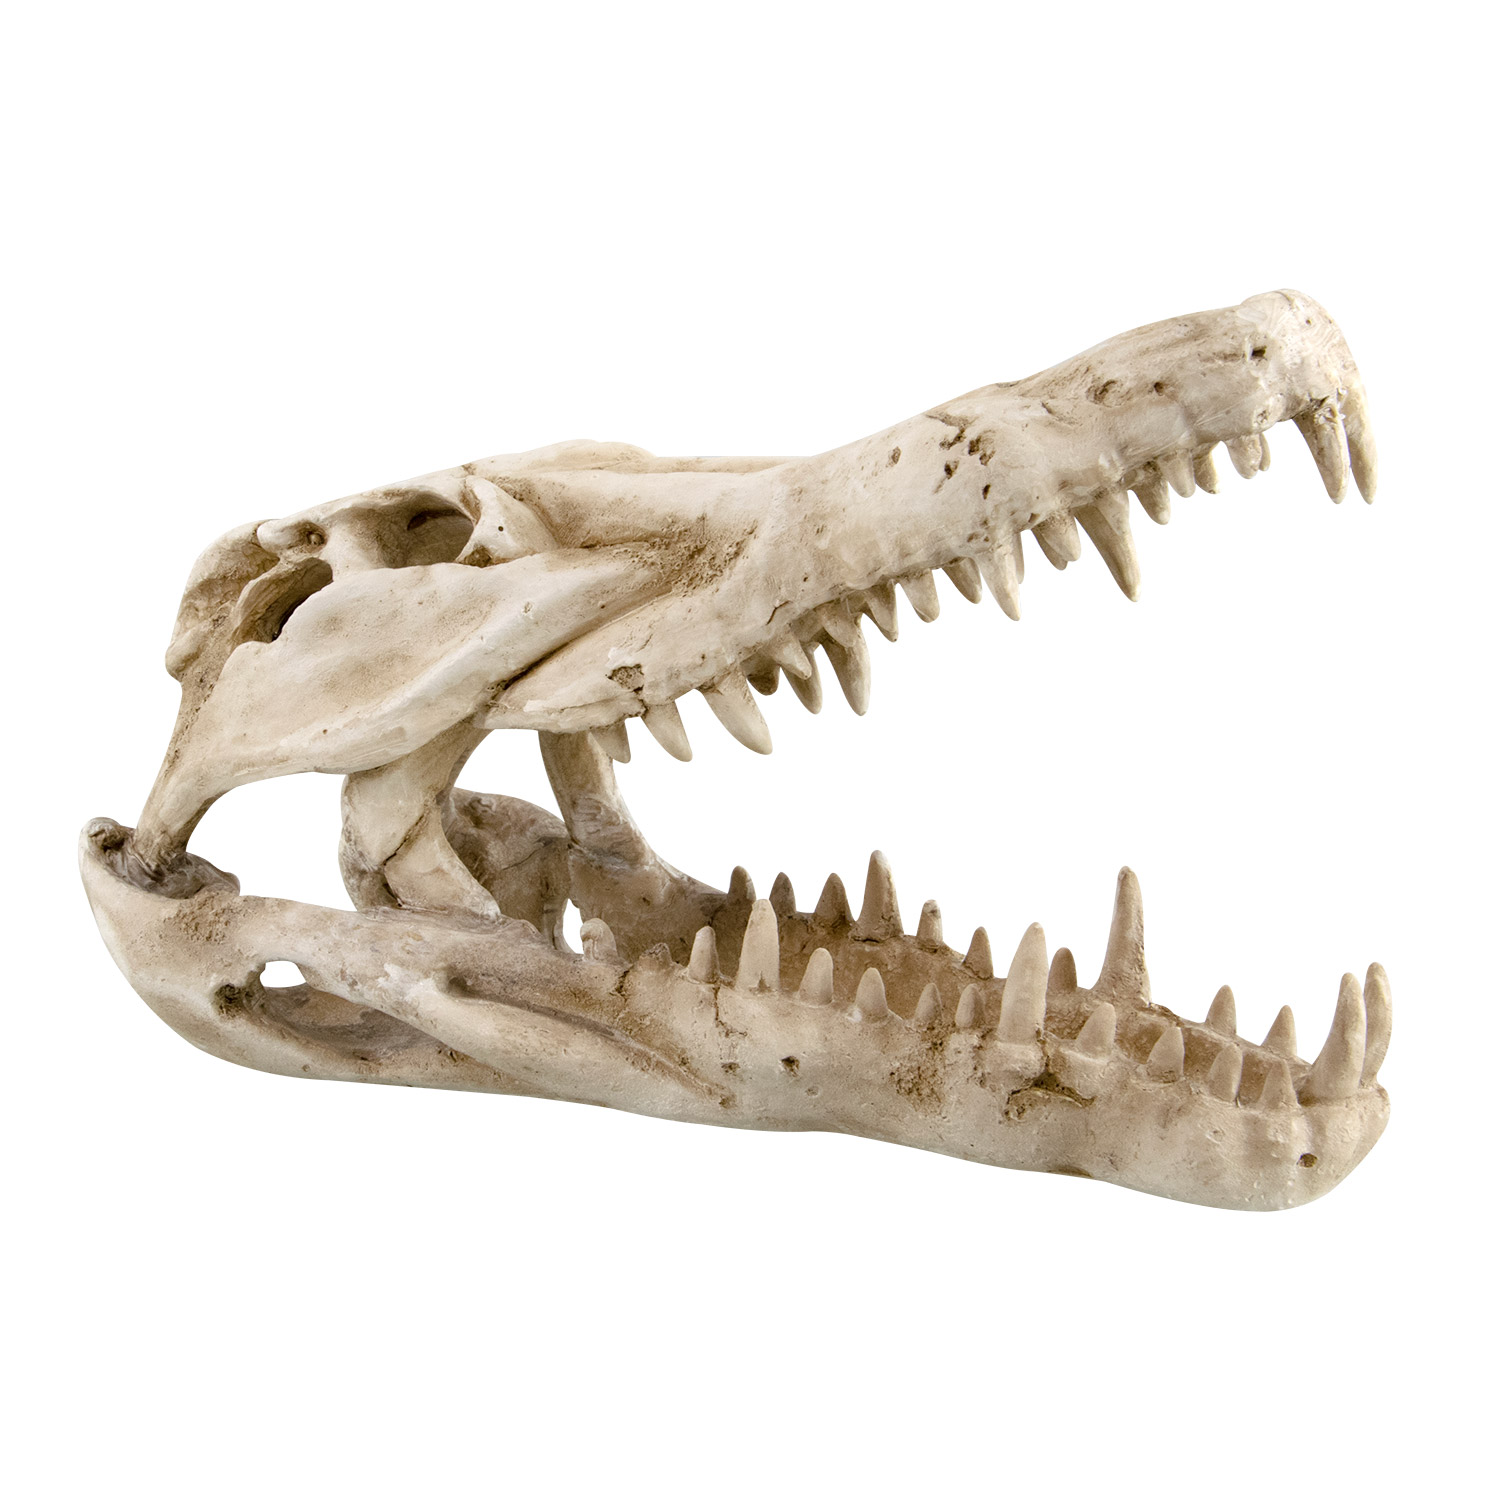 Reptiles treasures Abri en forme de crâne de dinosaure - Dino Skull Shelter